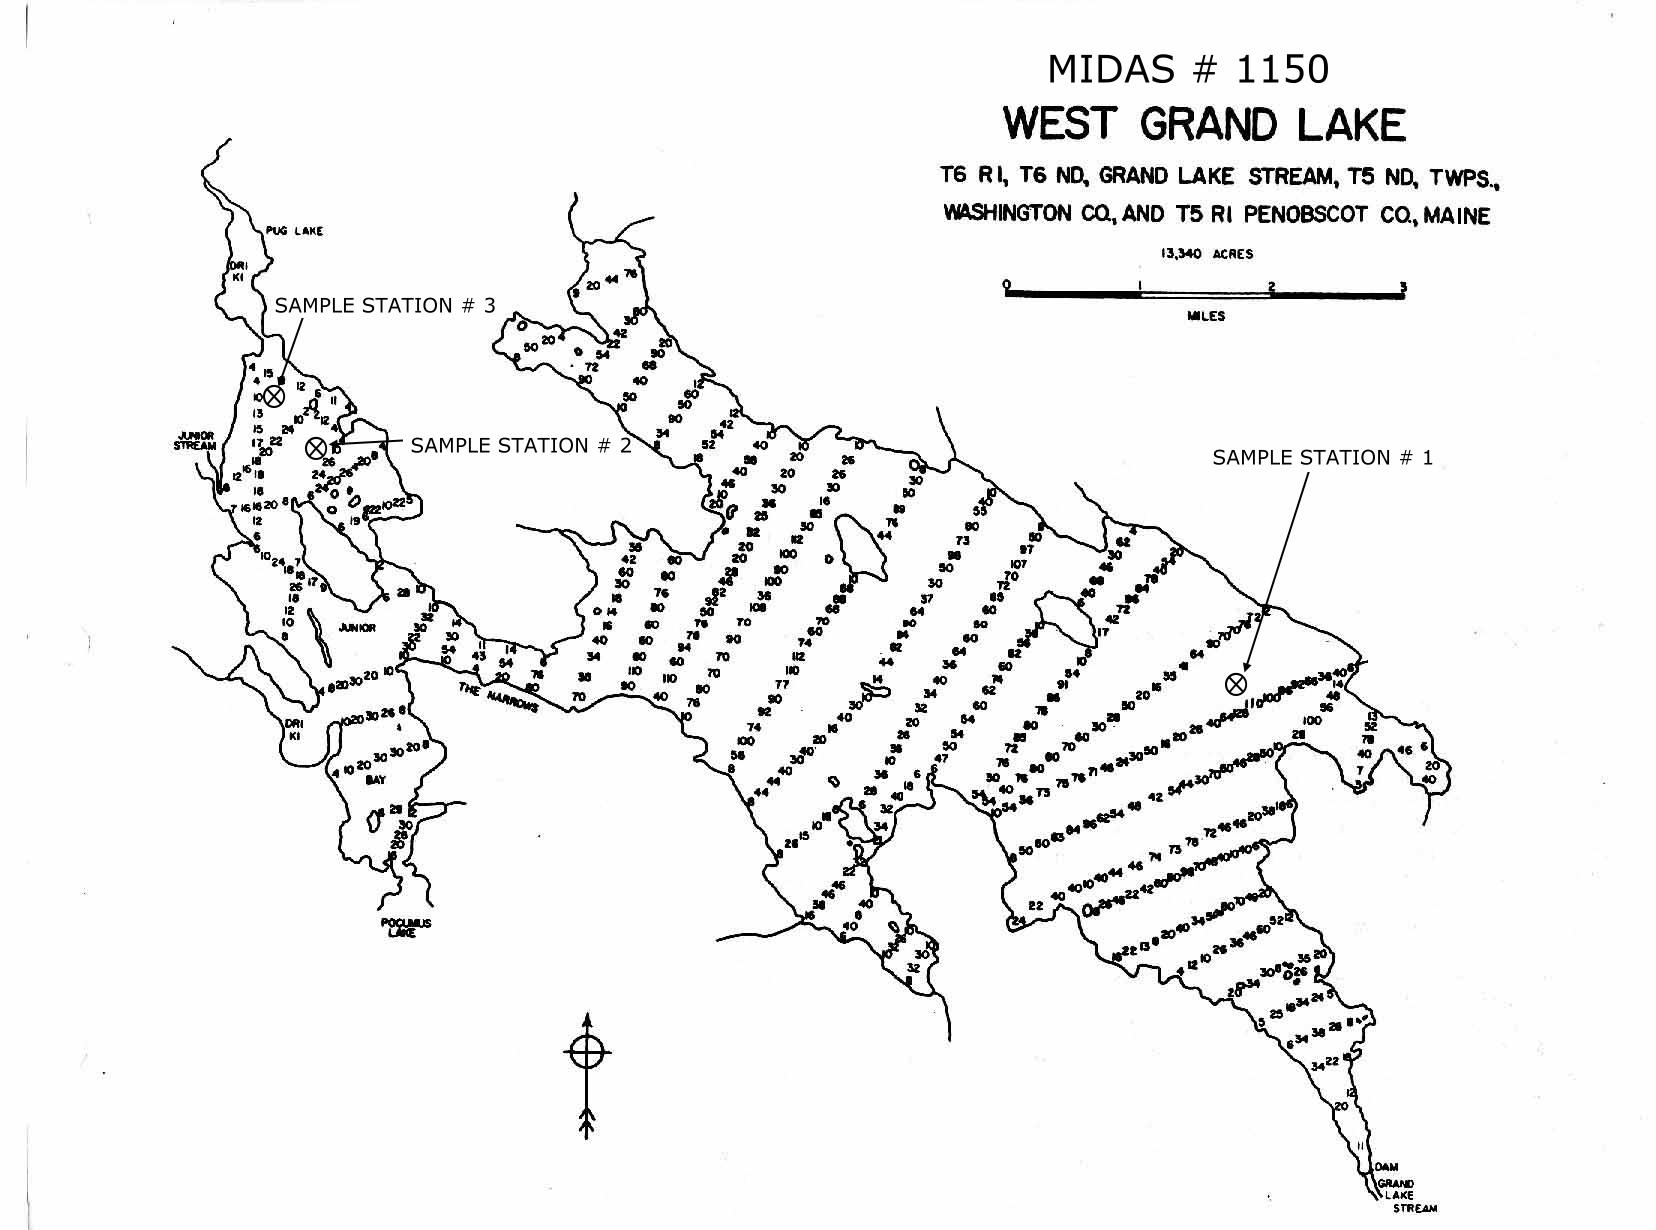 East Grand Lake Depth Chart